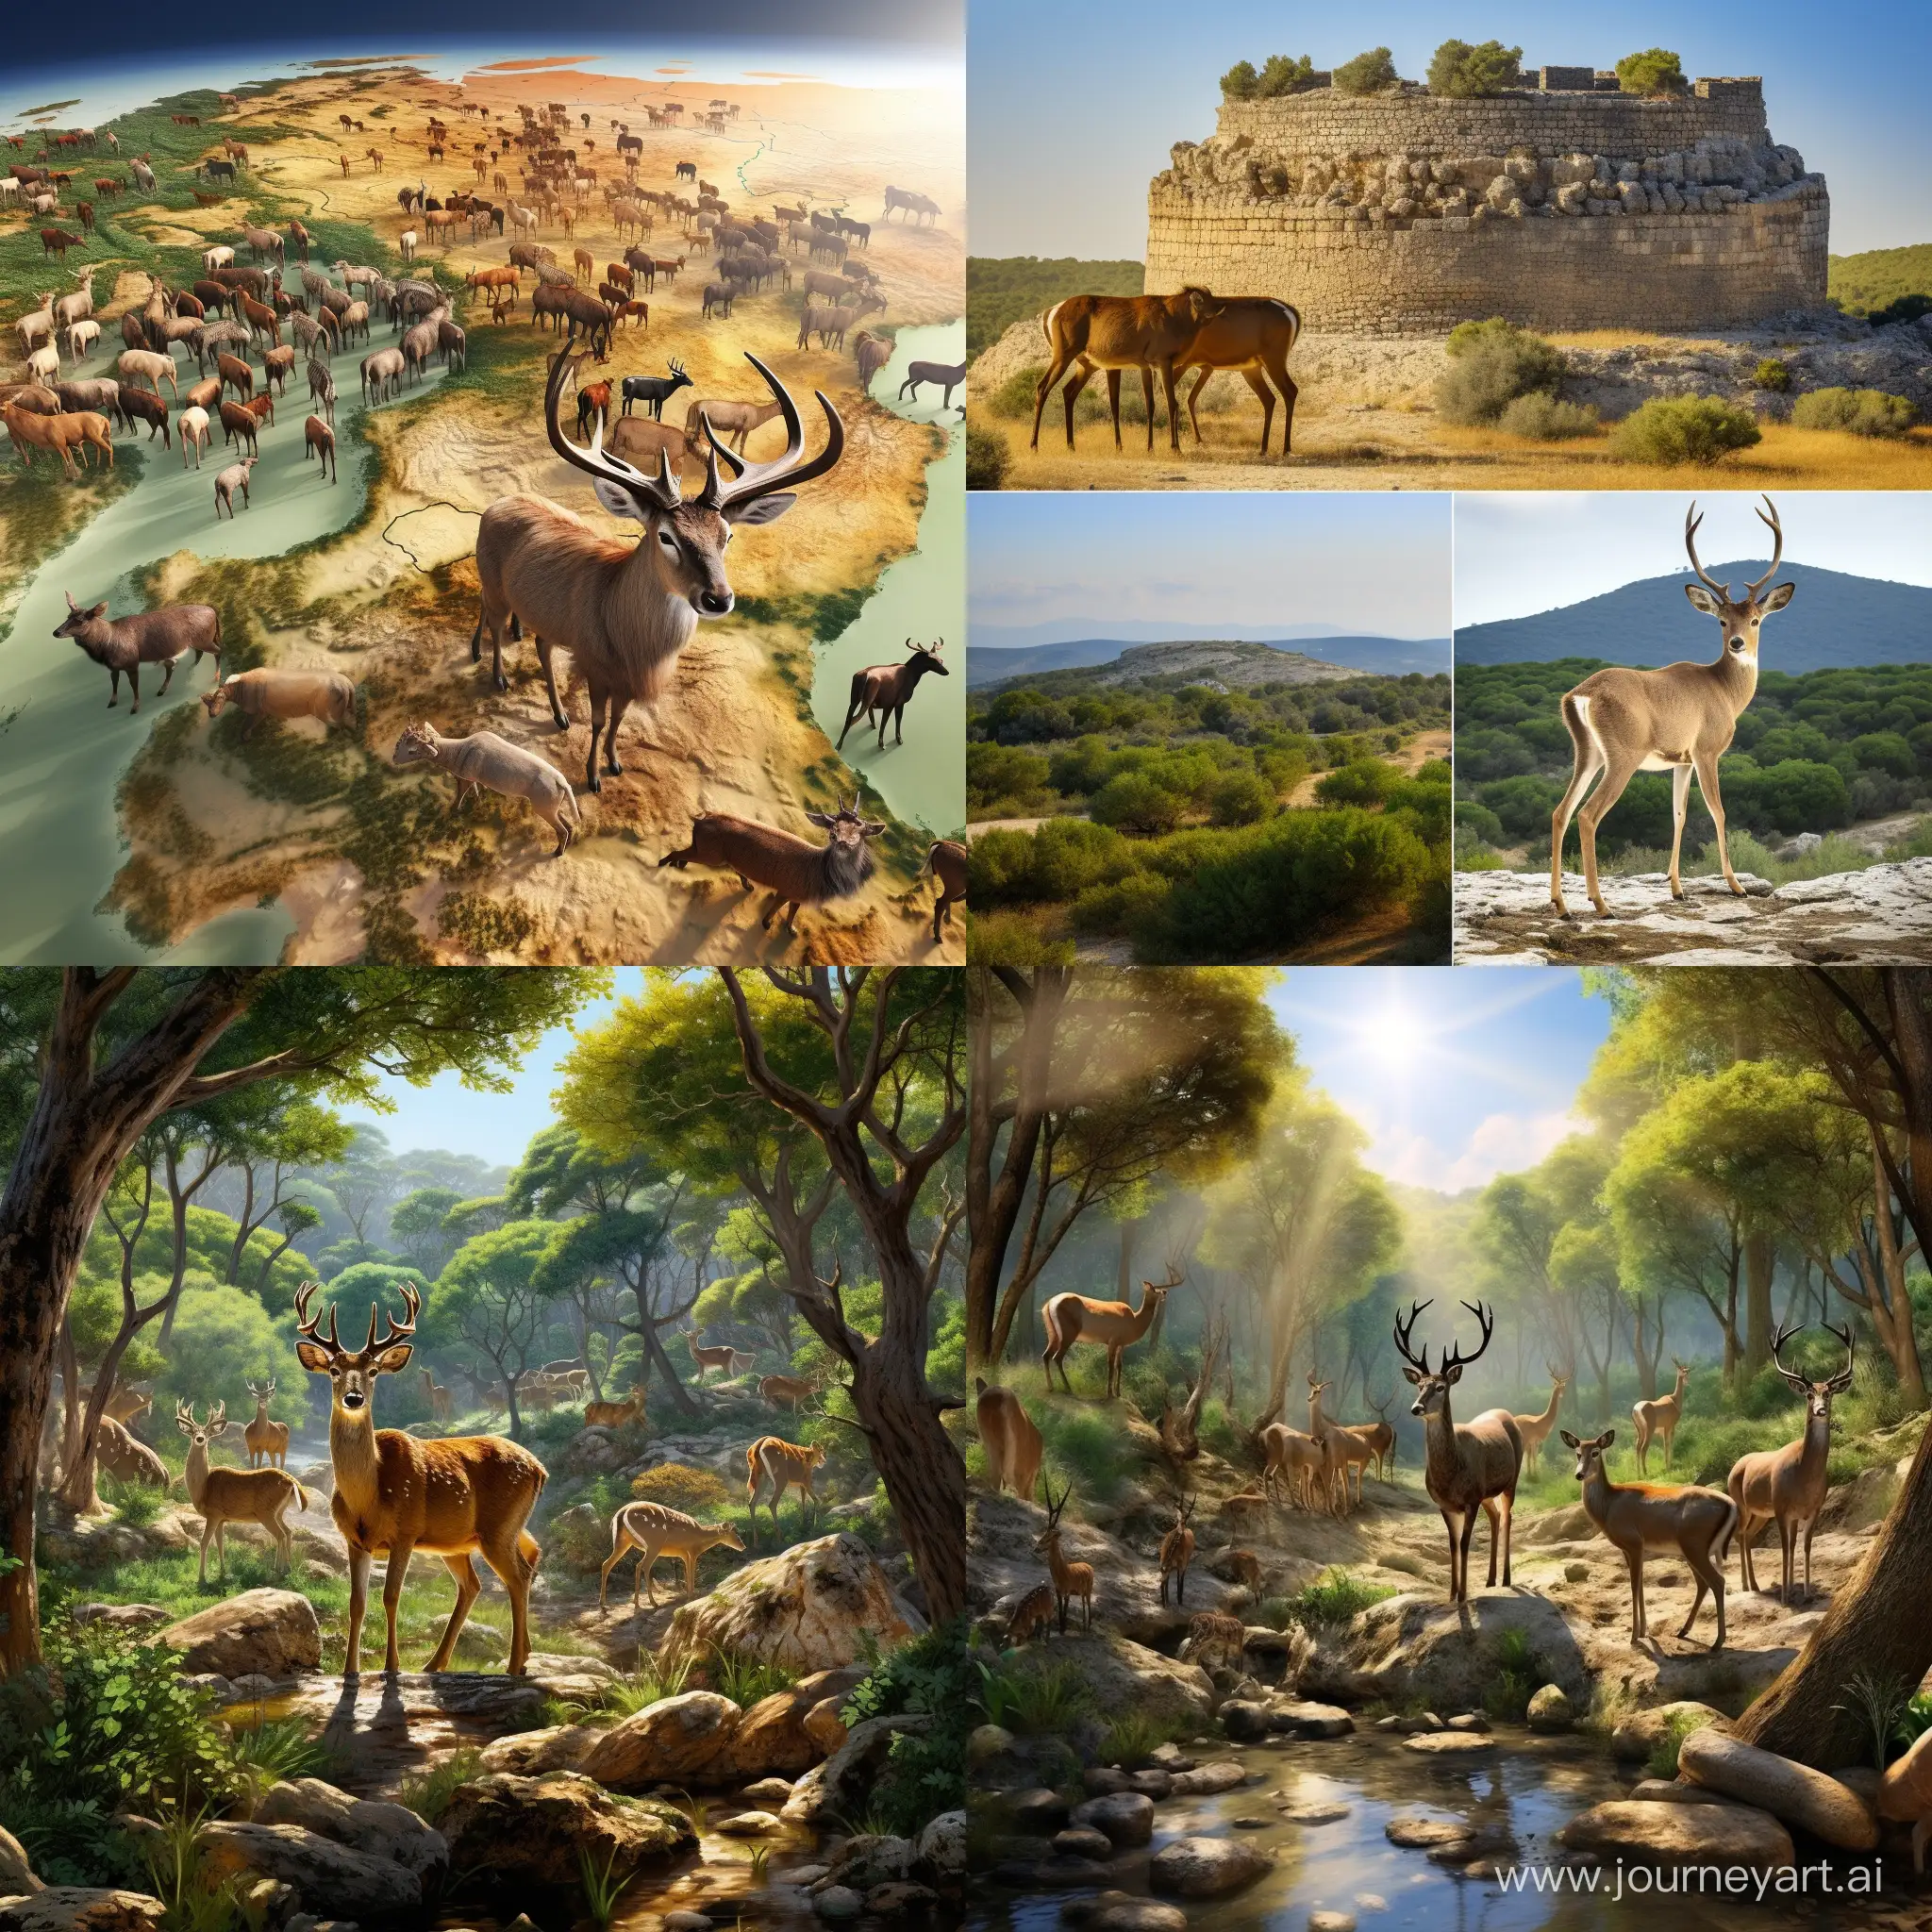 Diverse-Fauna-of-the-Ancient-Iberian-Peninsula-Realistic-5000YearOld-Wildlife-Art